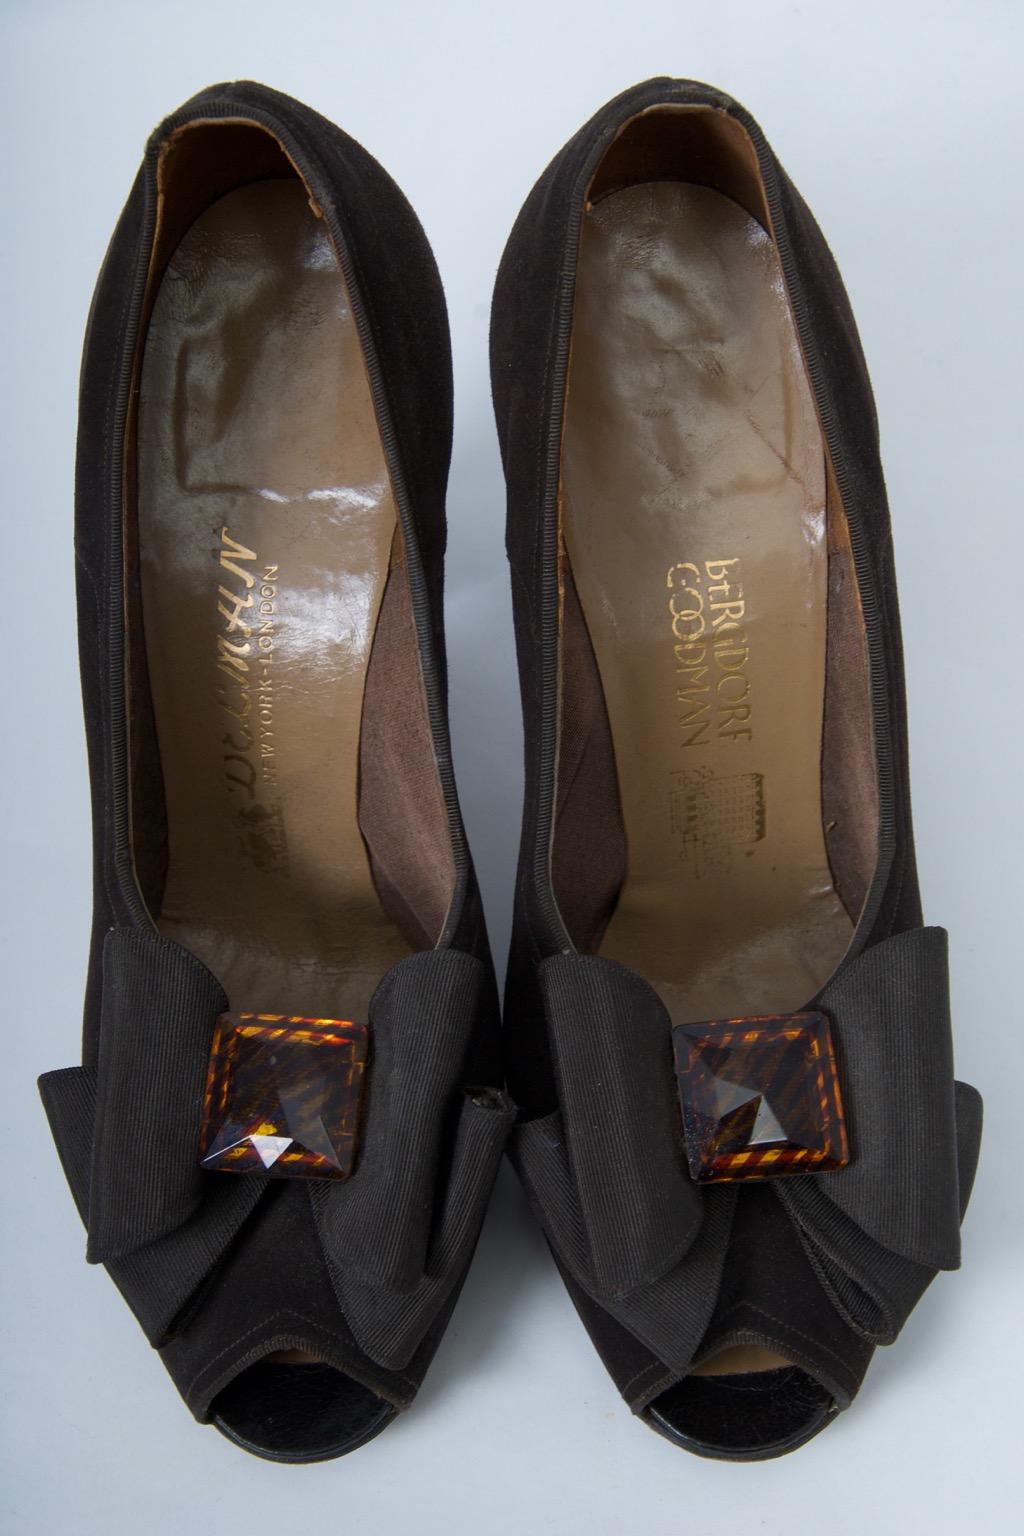 Delman Brown Suede Open-Toe Shoes, c.1950 For Sale 1